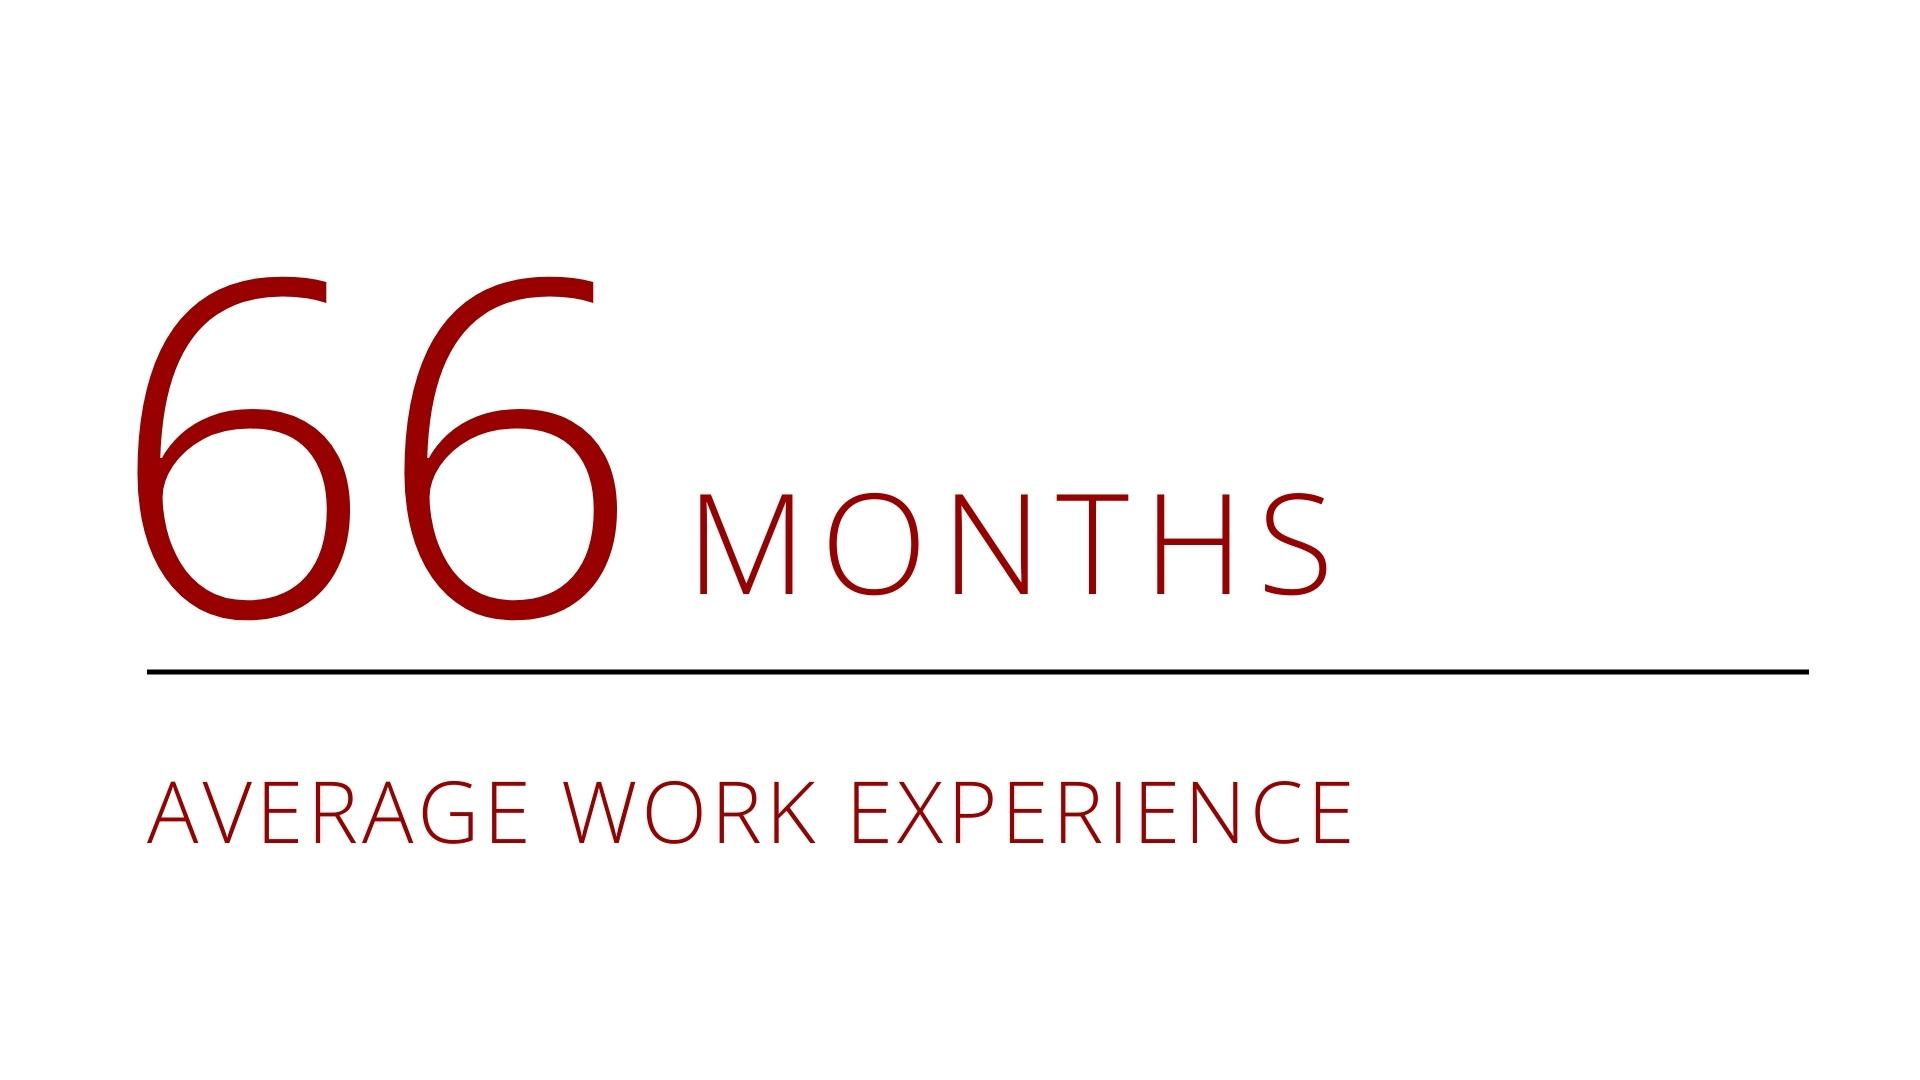 66 months average work experience